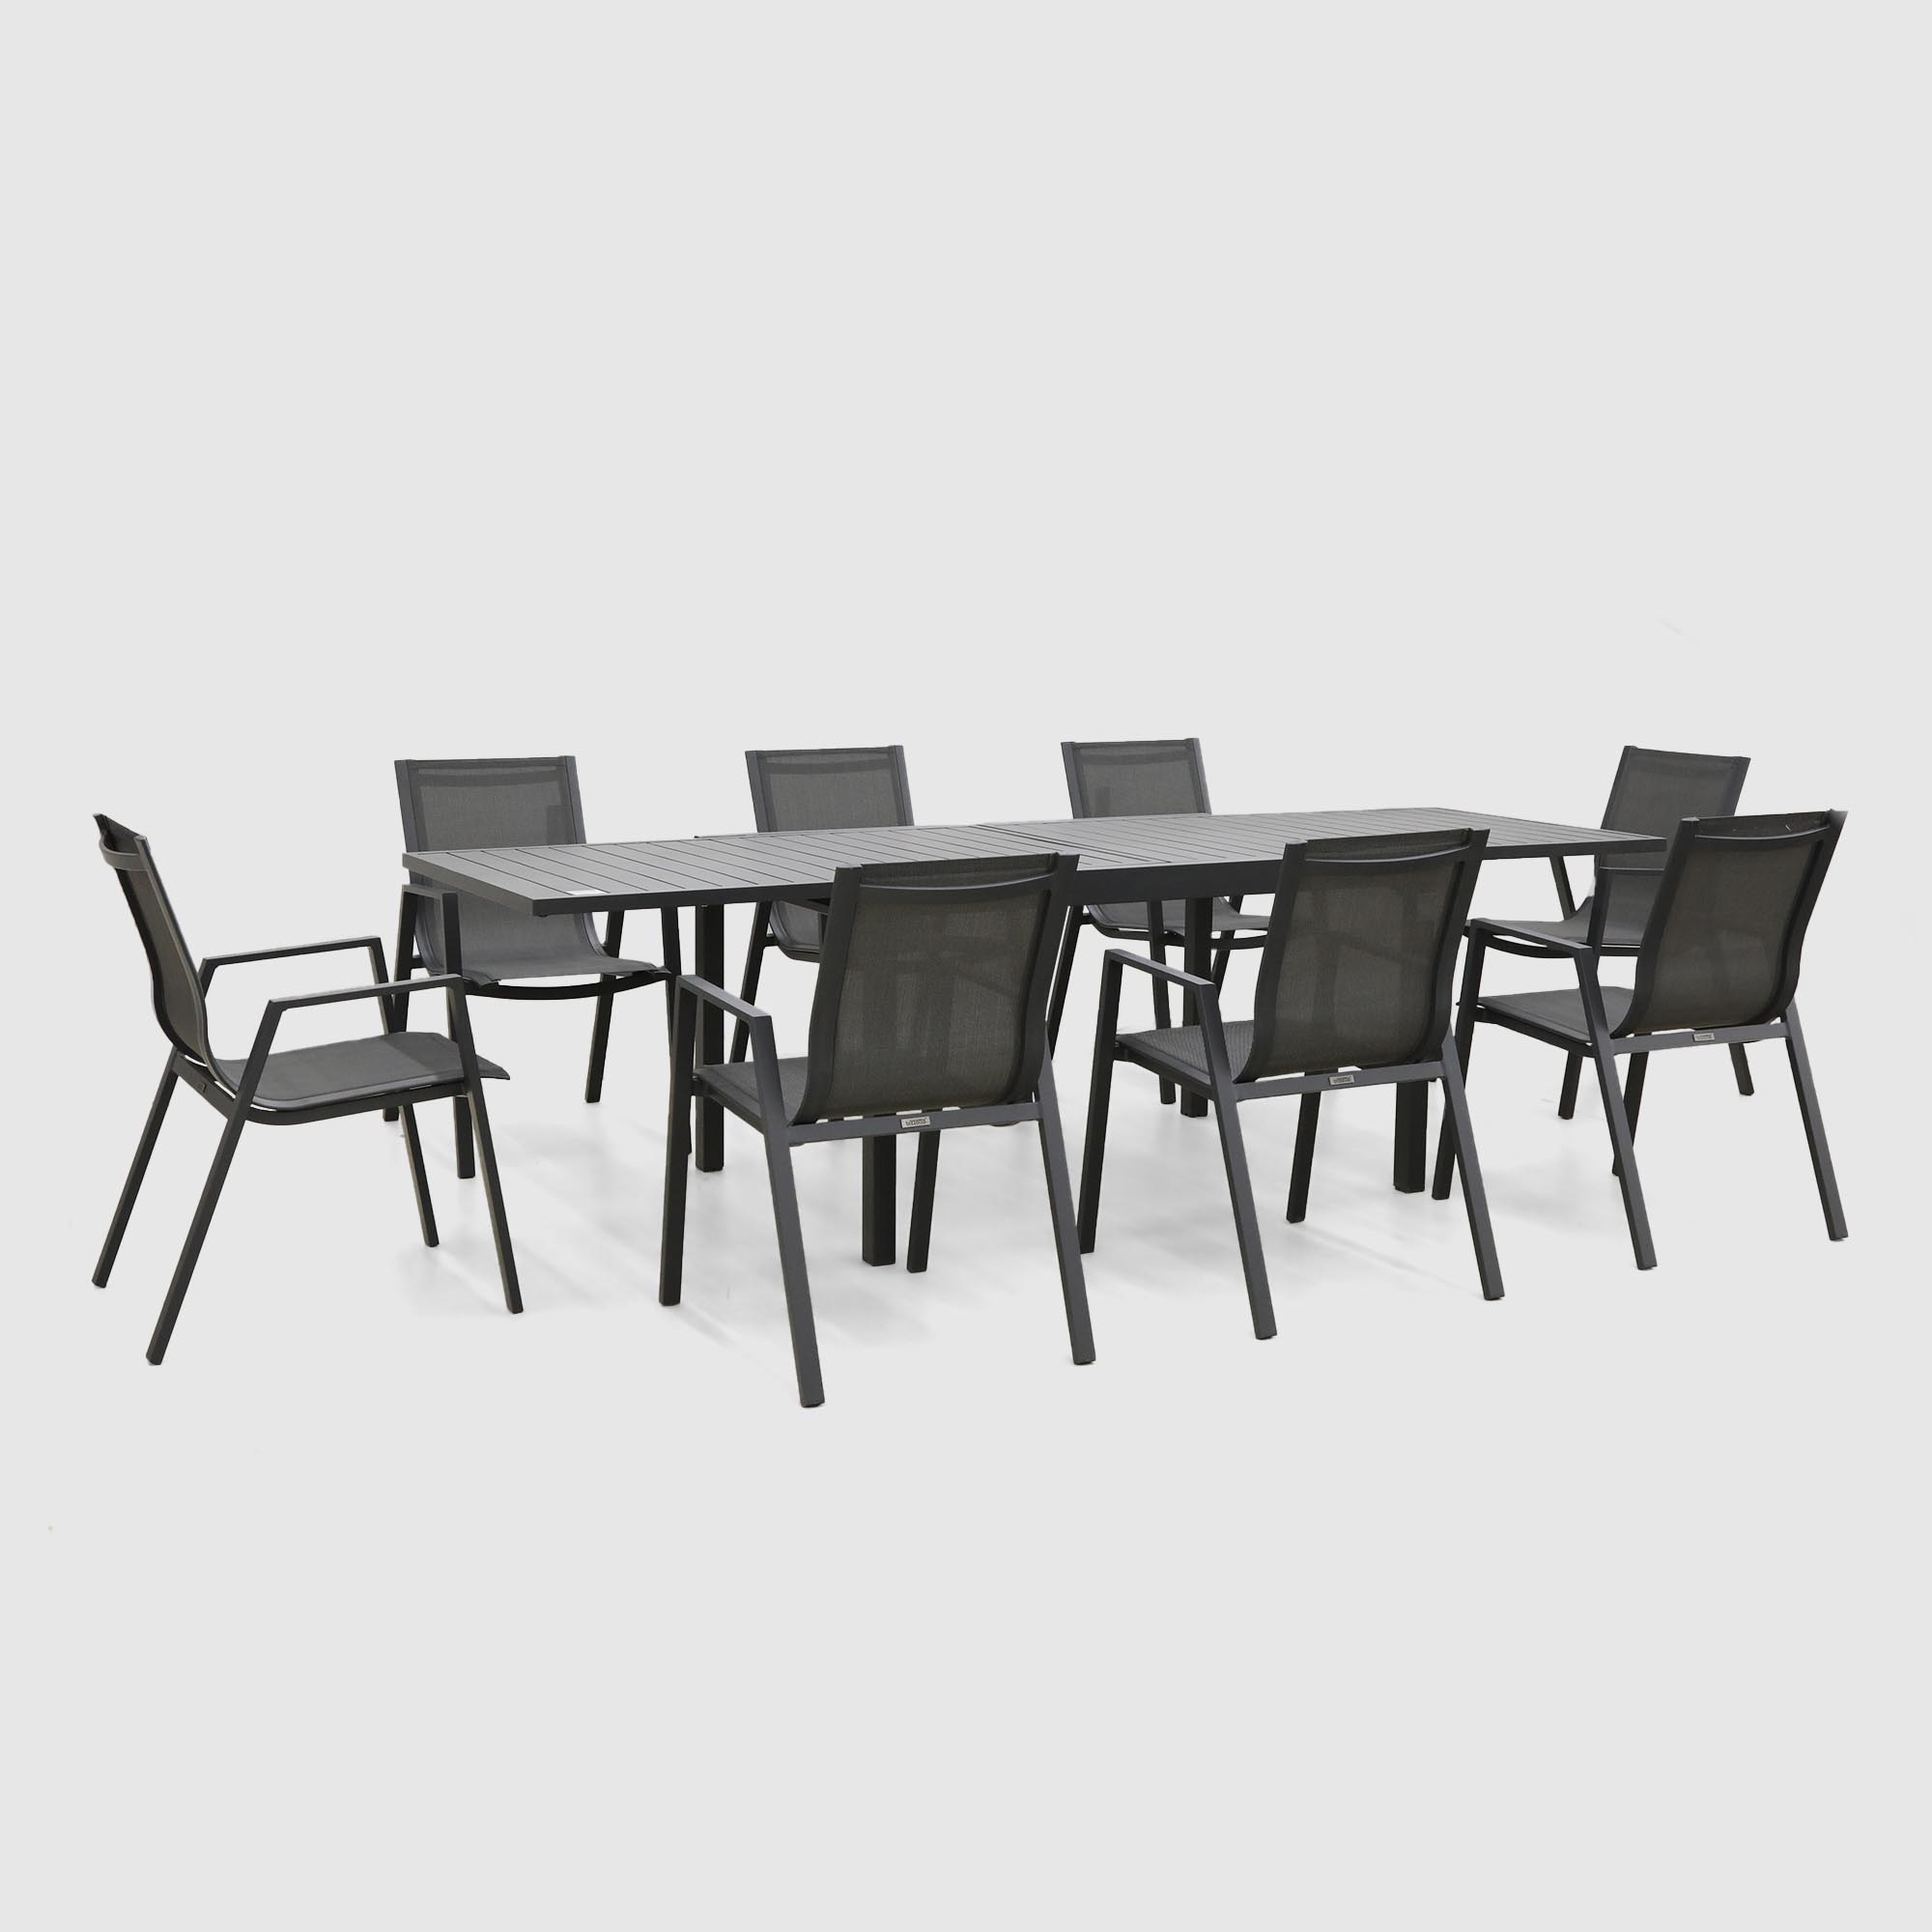 Комплект мебели Bizzotto Pelagius стол и 8 кресел, цвет антрацитовый, размер 63х55х82